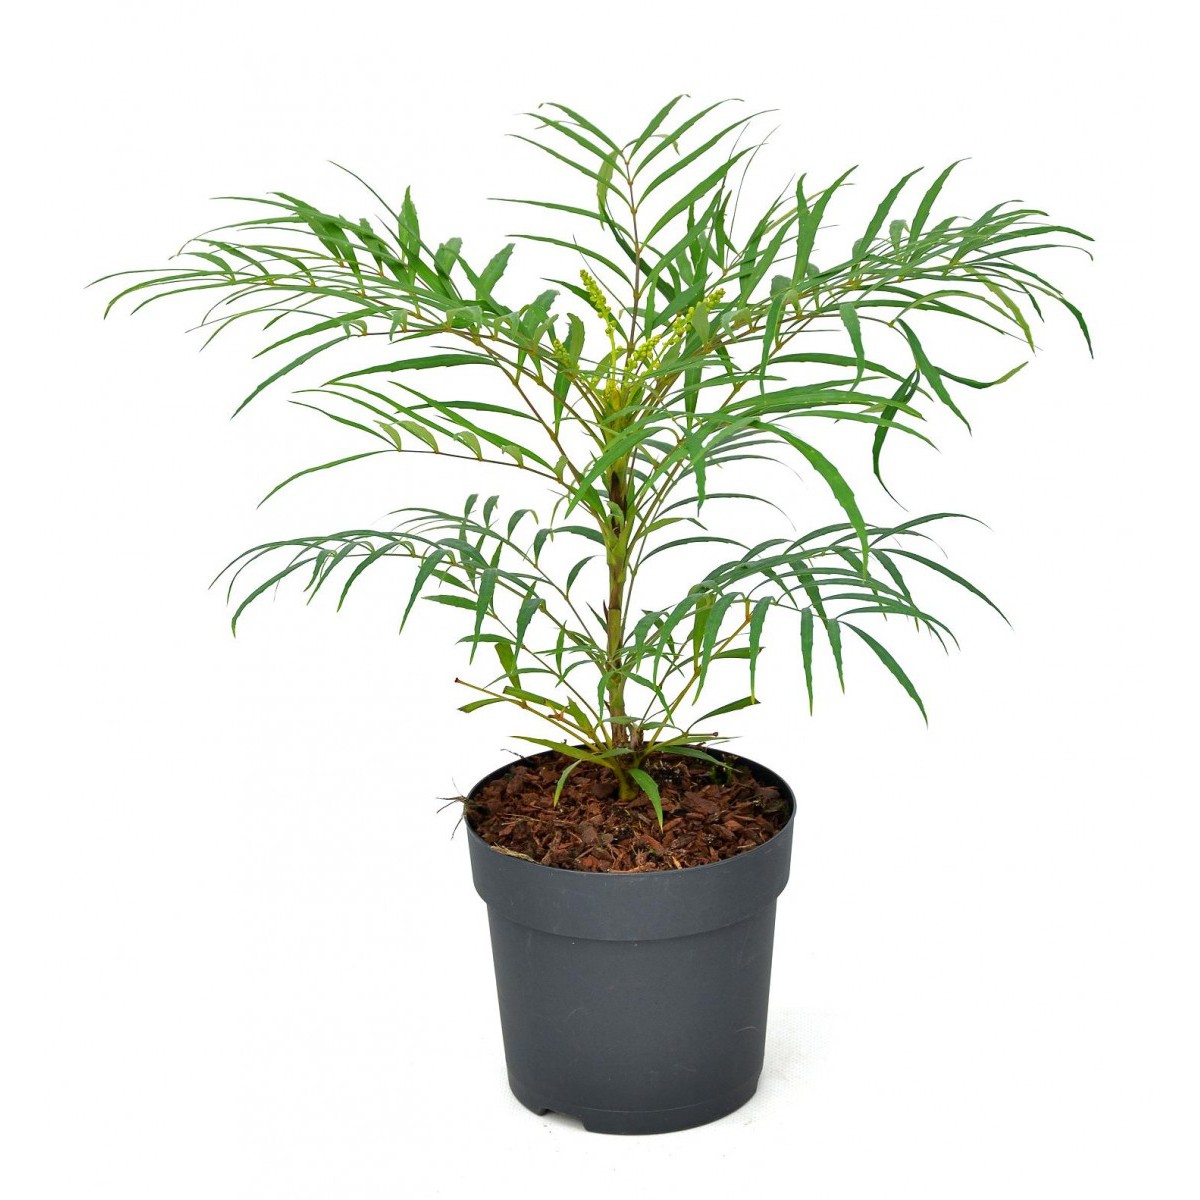   Mahonia eurybracteata 'Soft Caress'®  C3 25-30 cm.